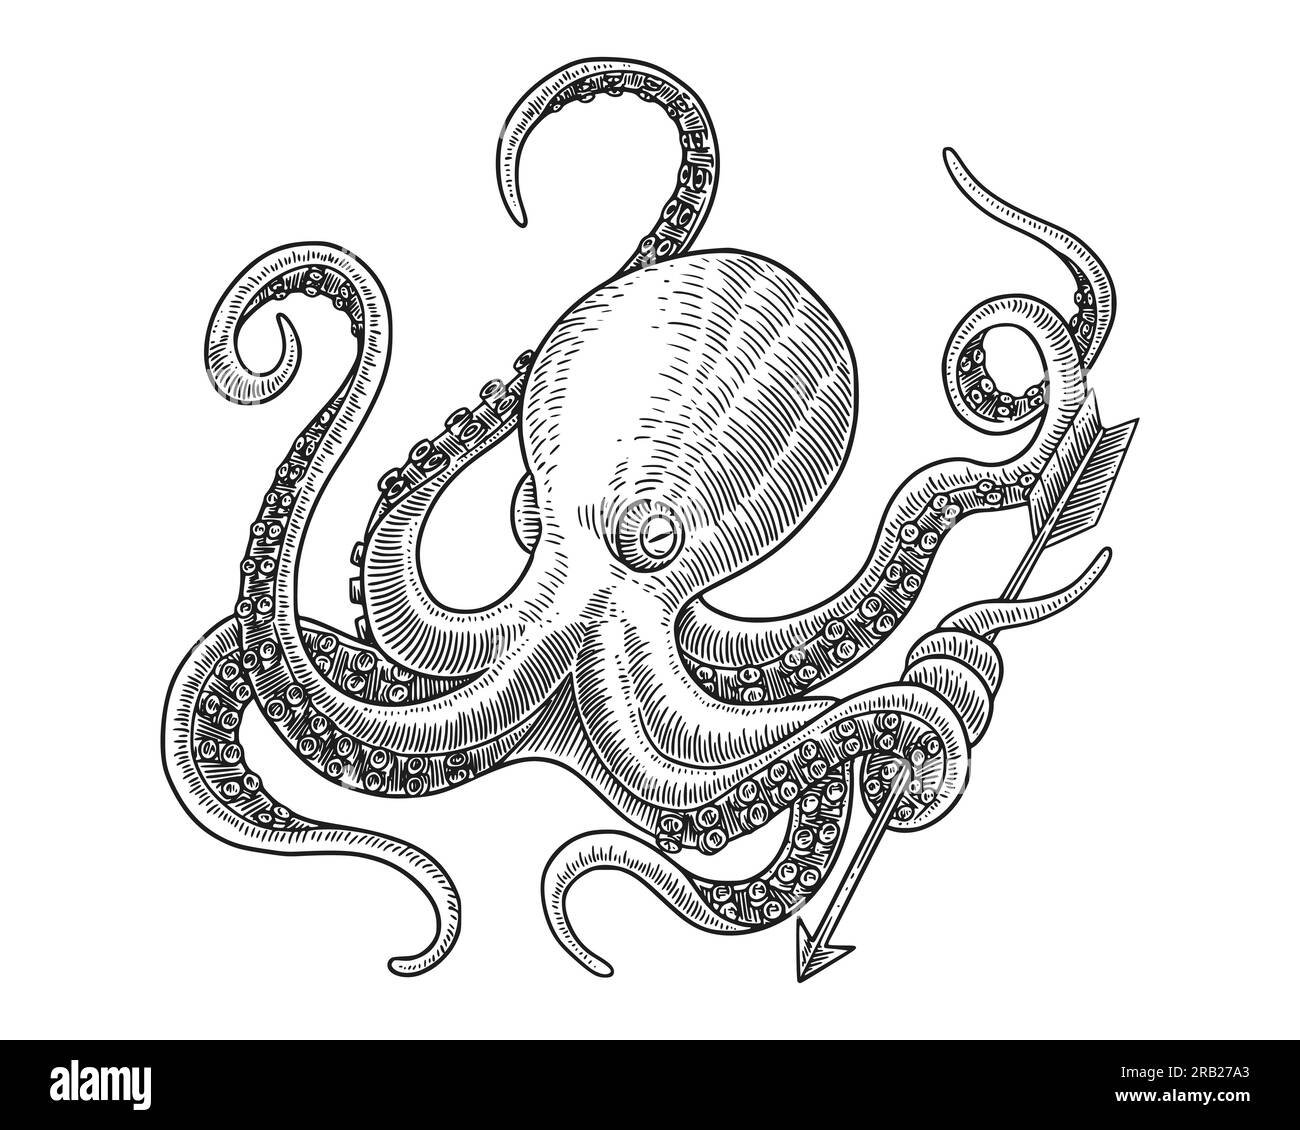 Kraken drawing Black and White Stock Photos & Images - Alamy